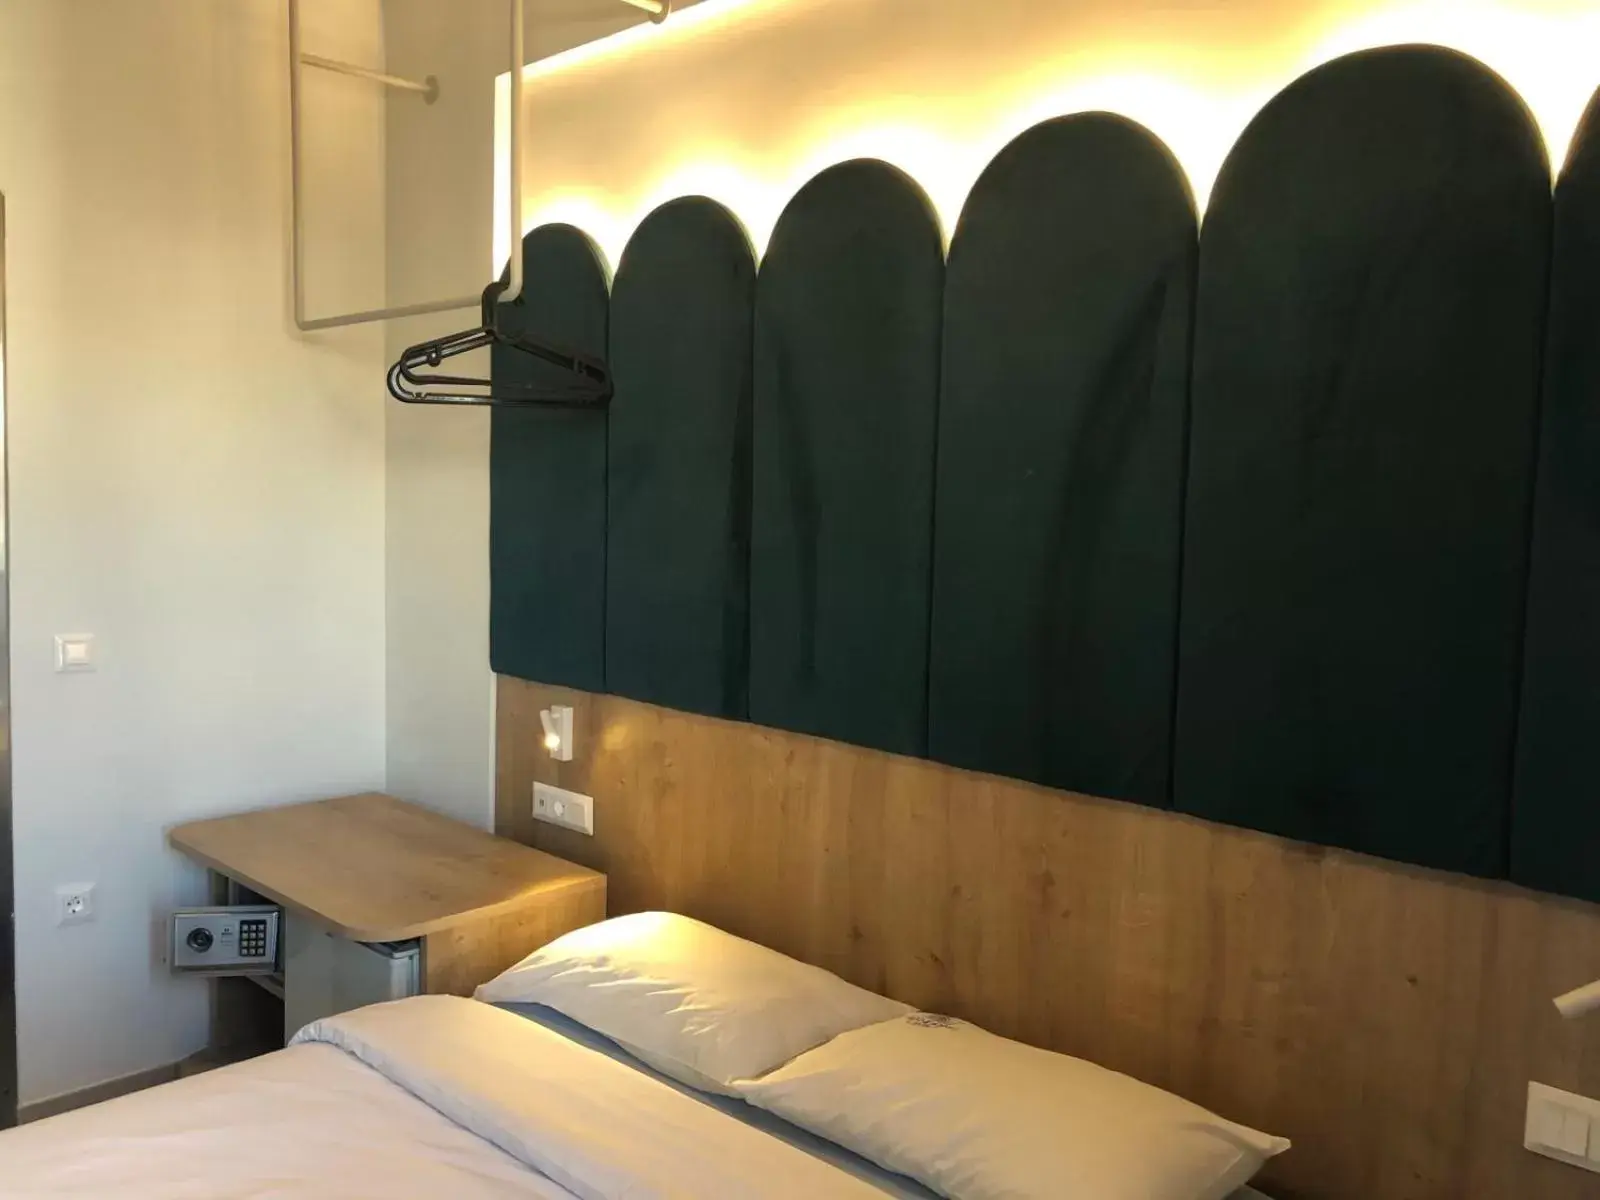 Bed in Mandrino Hotel